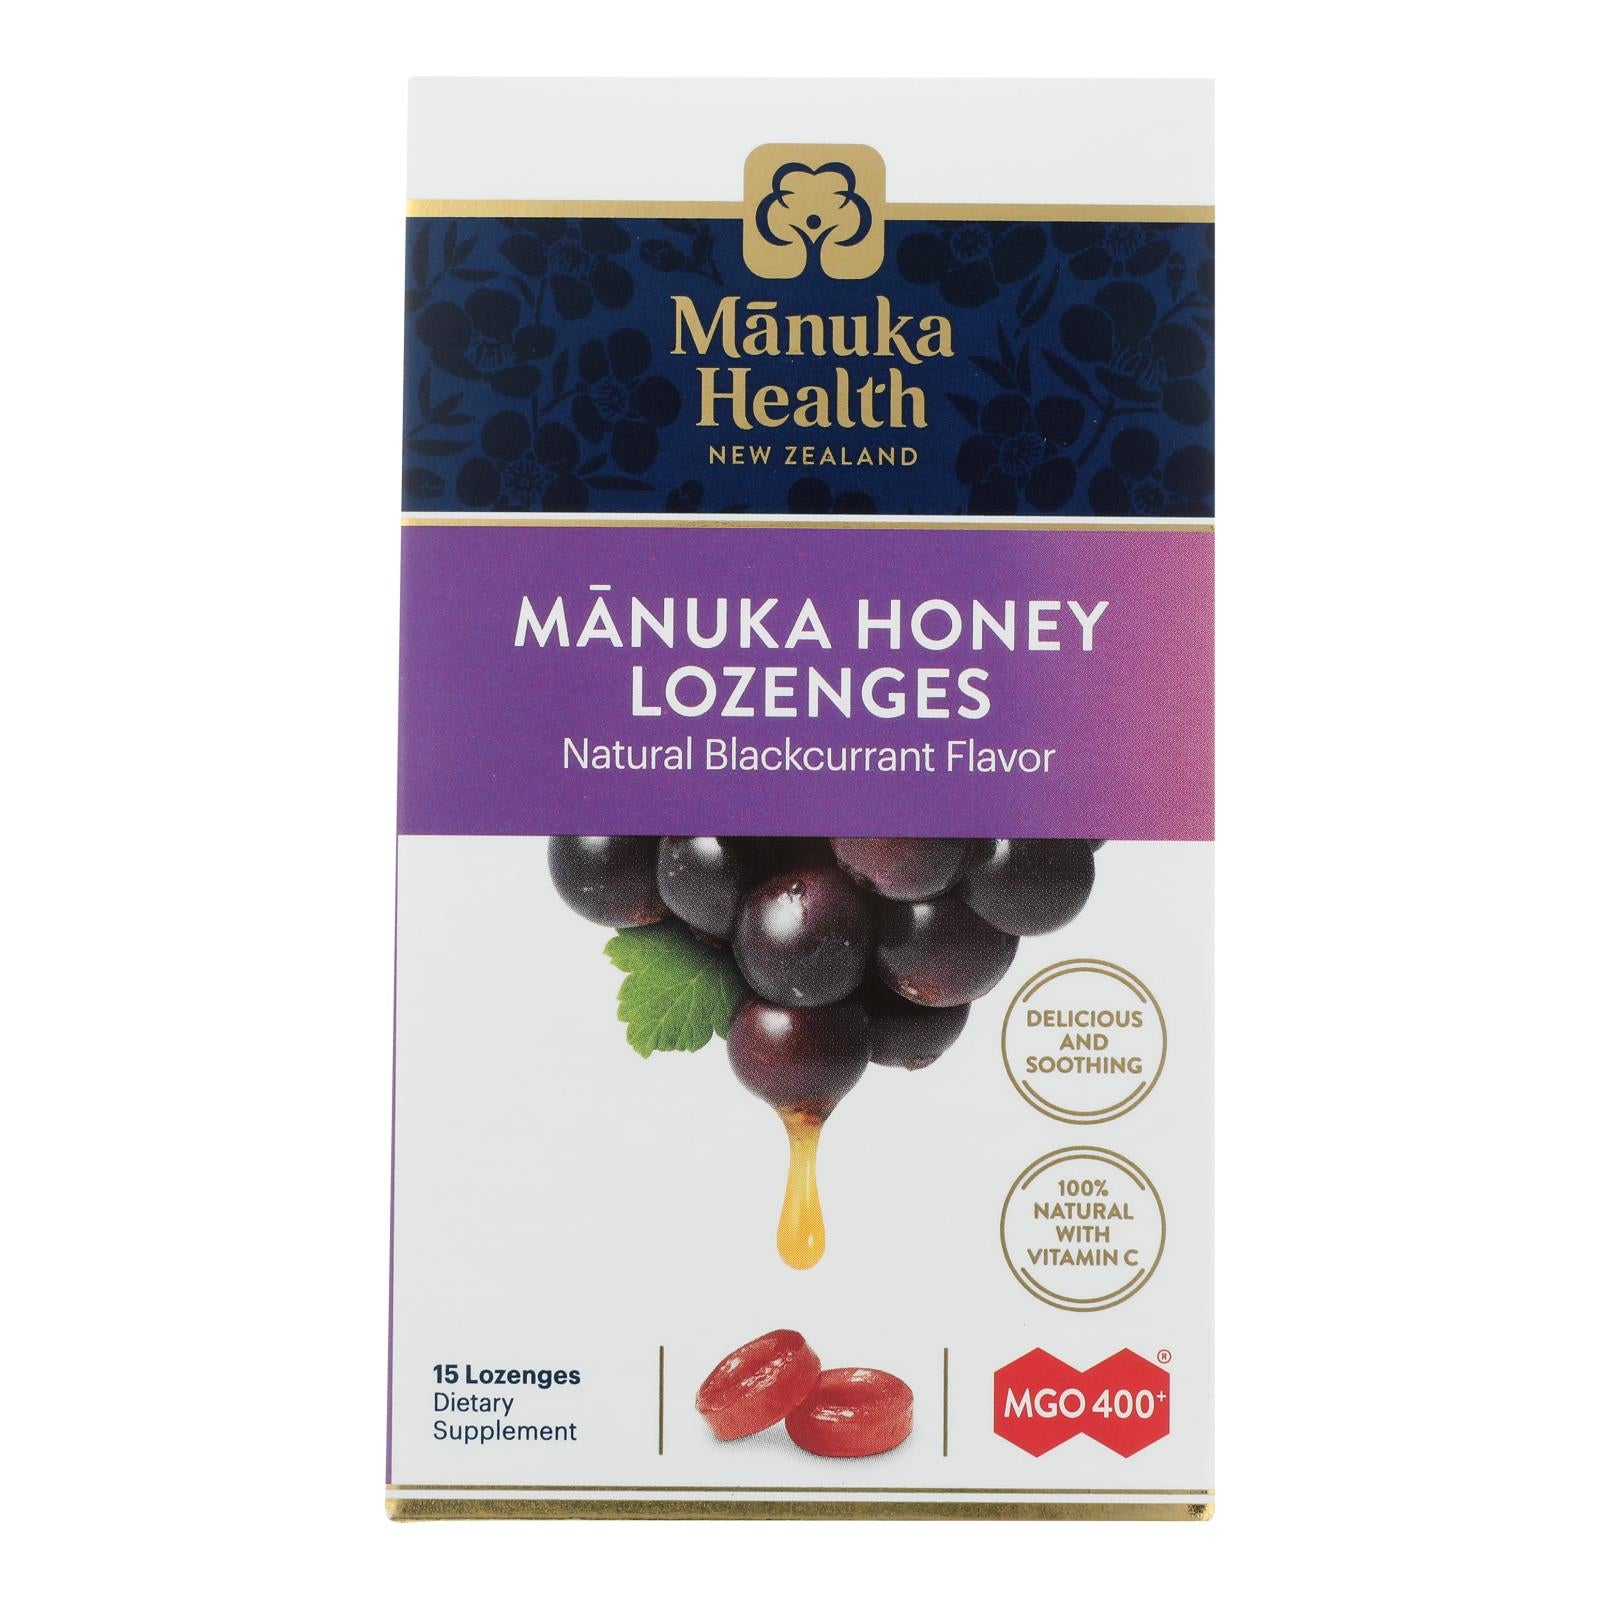 Santé Manuka, Manuka Health - Loz Honey Mgo 400+ Blkcrnt - 1 Each 1-15 CT